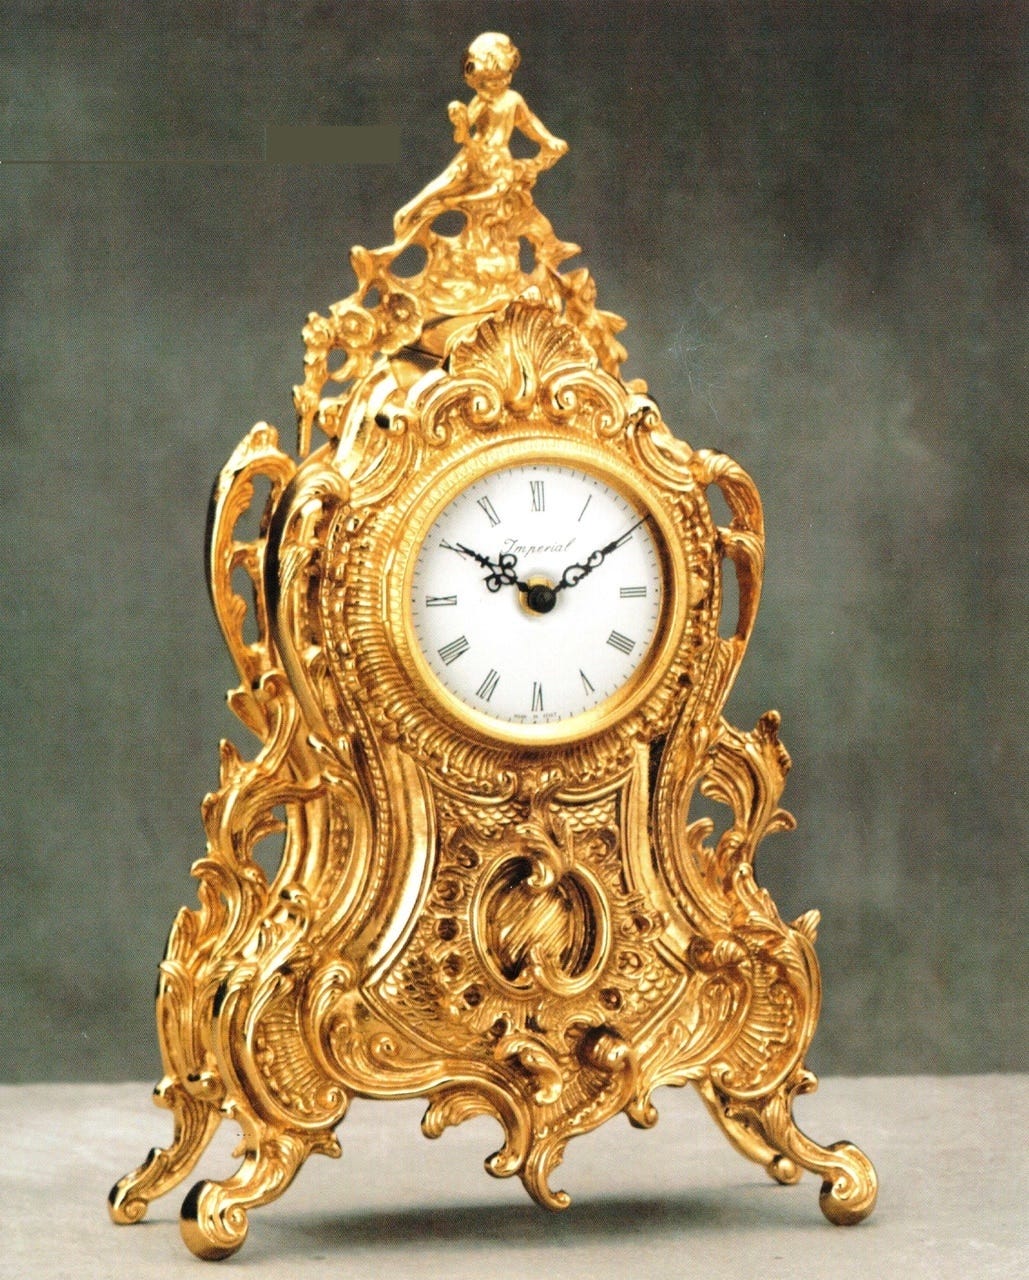 Ornamental d'Oro Ormolu - Mantel, Table, or Desk Clock - Louis Quinze,  Rococo - Choose Your Finish - Handmade Reproduction of a 17th, 18th Century  Dore Bronze Antique, 6675